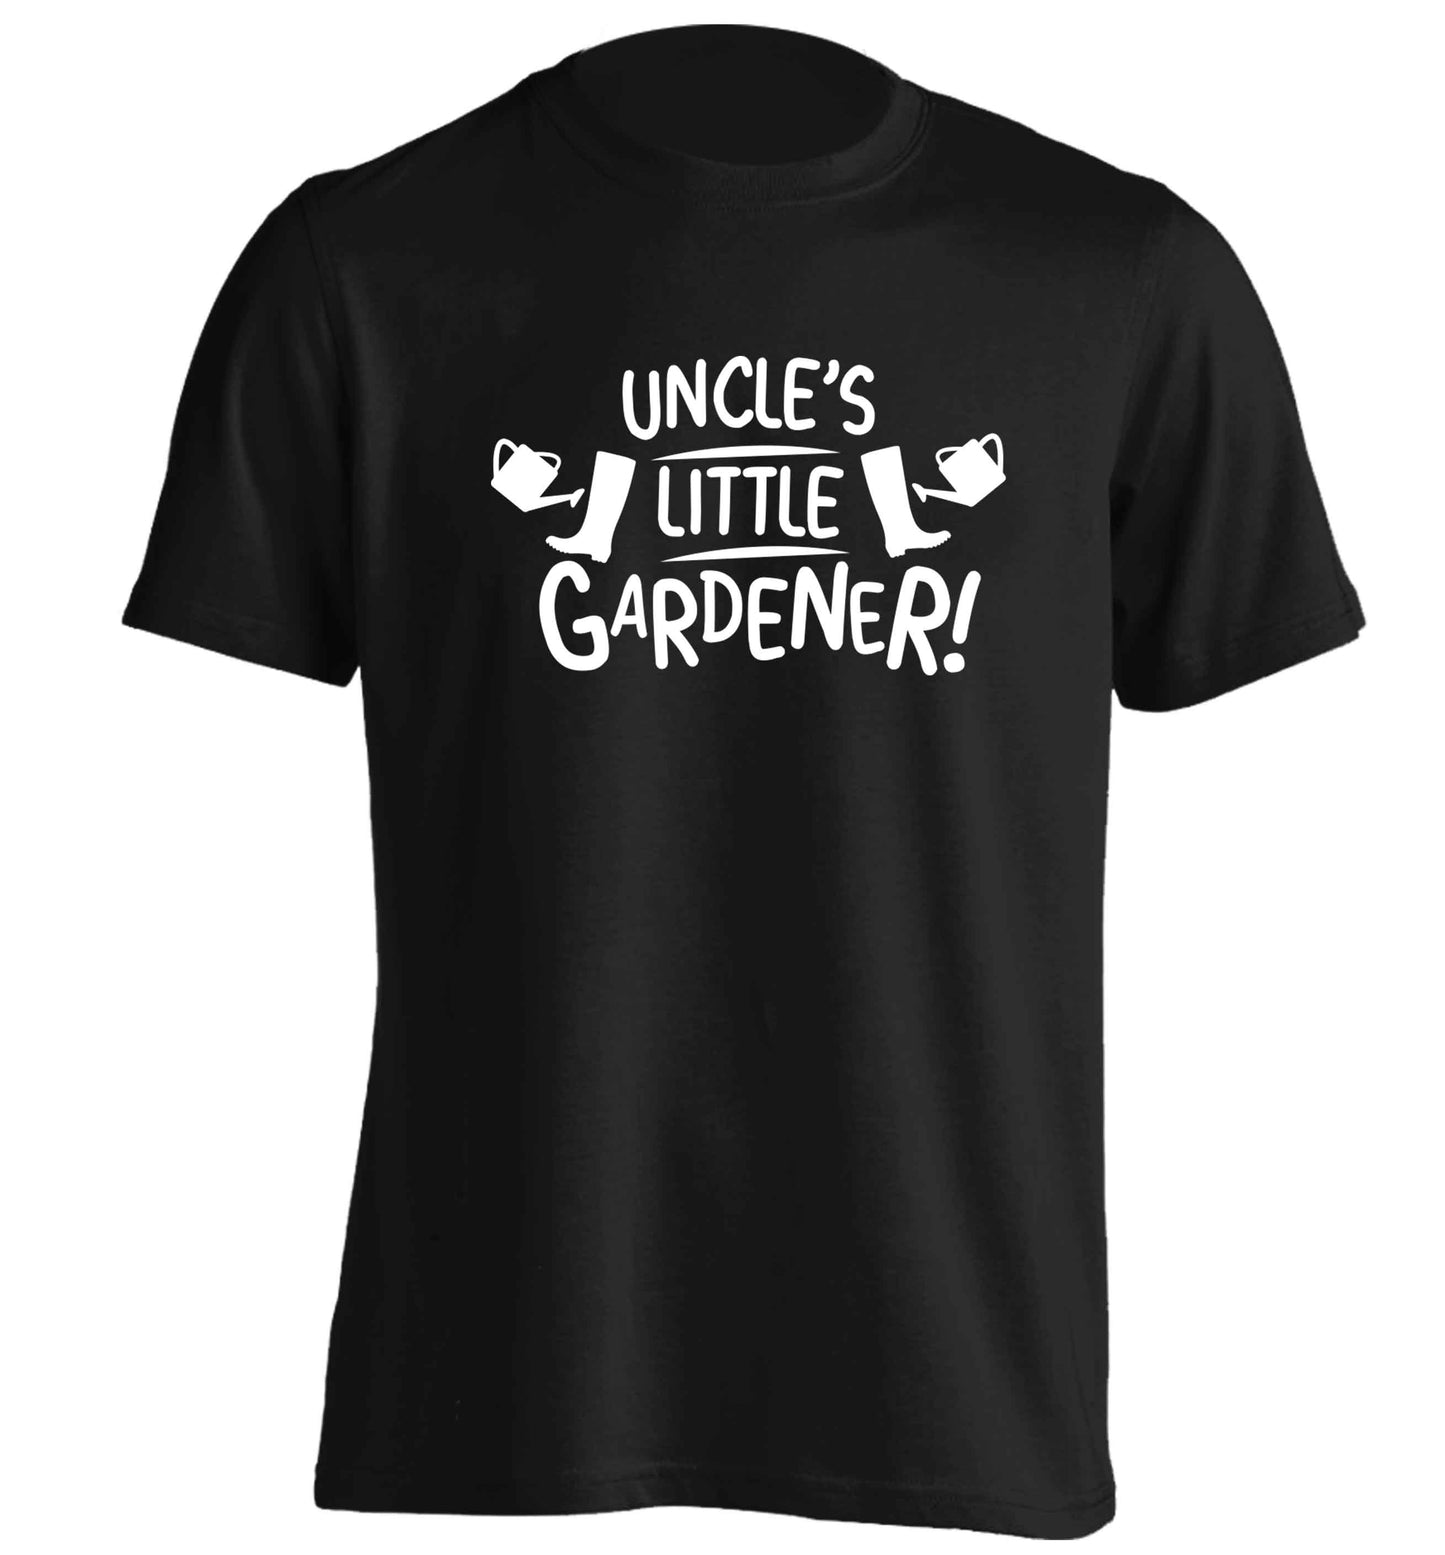 Uncle's little gardener adults unisex black Tshirt 2XL